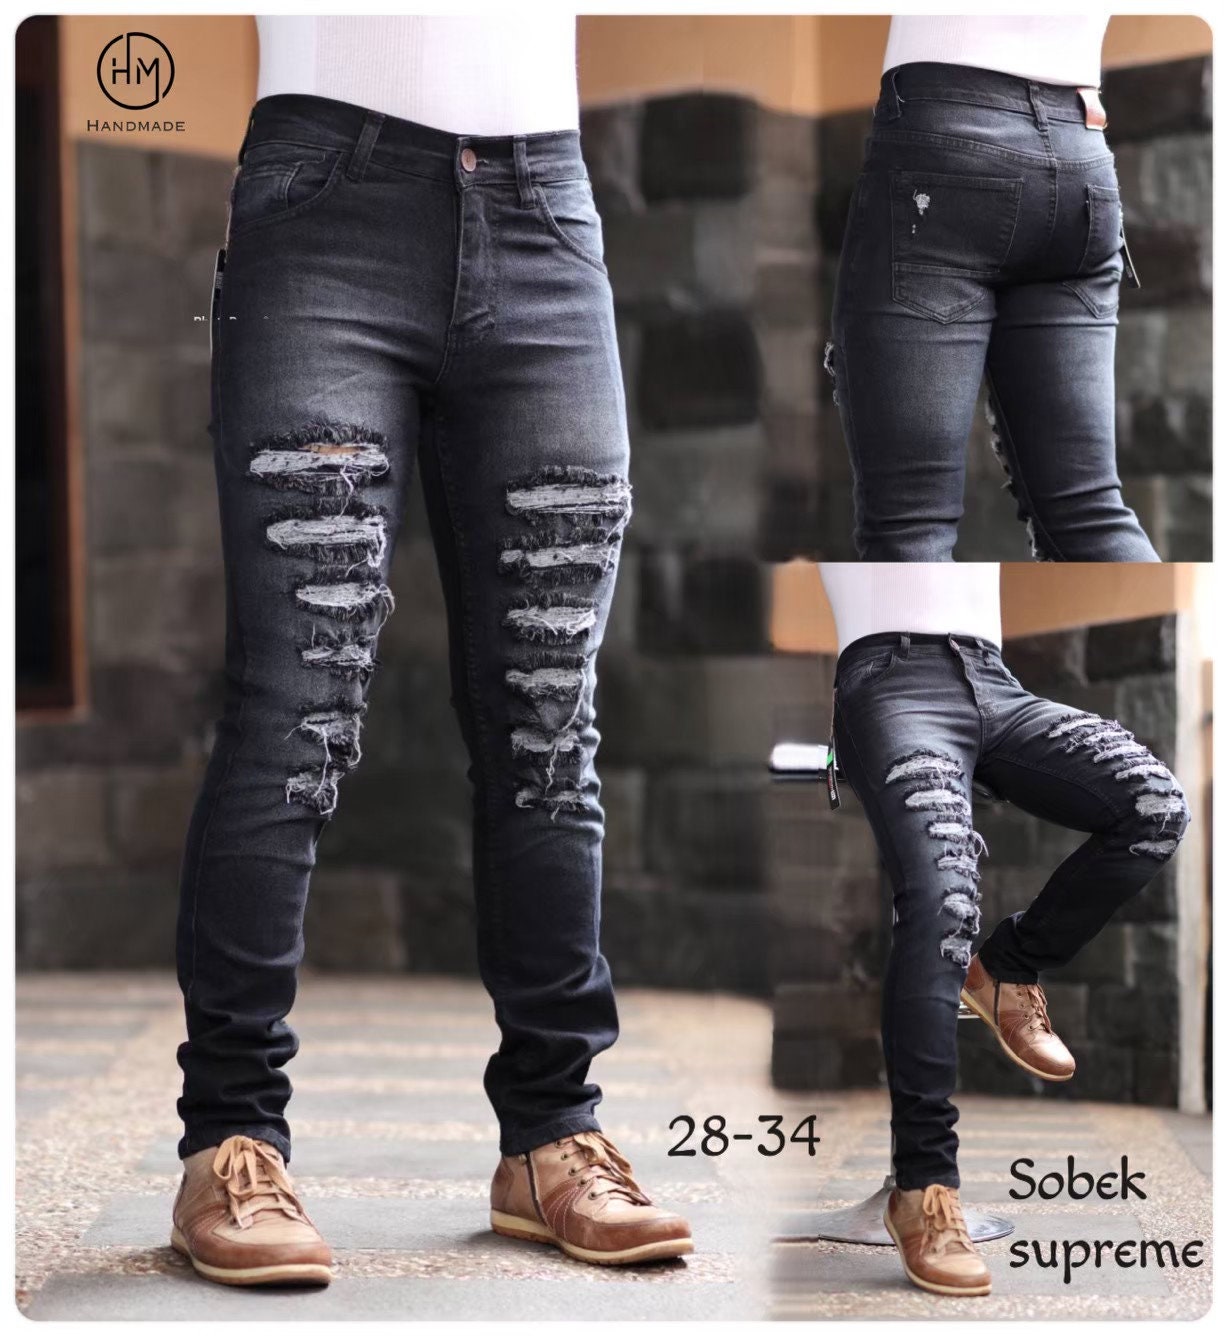 Men's stylist lazer damage jeans price -525/- rupees